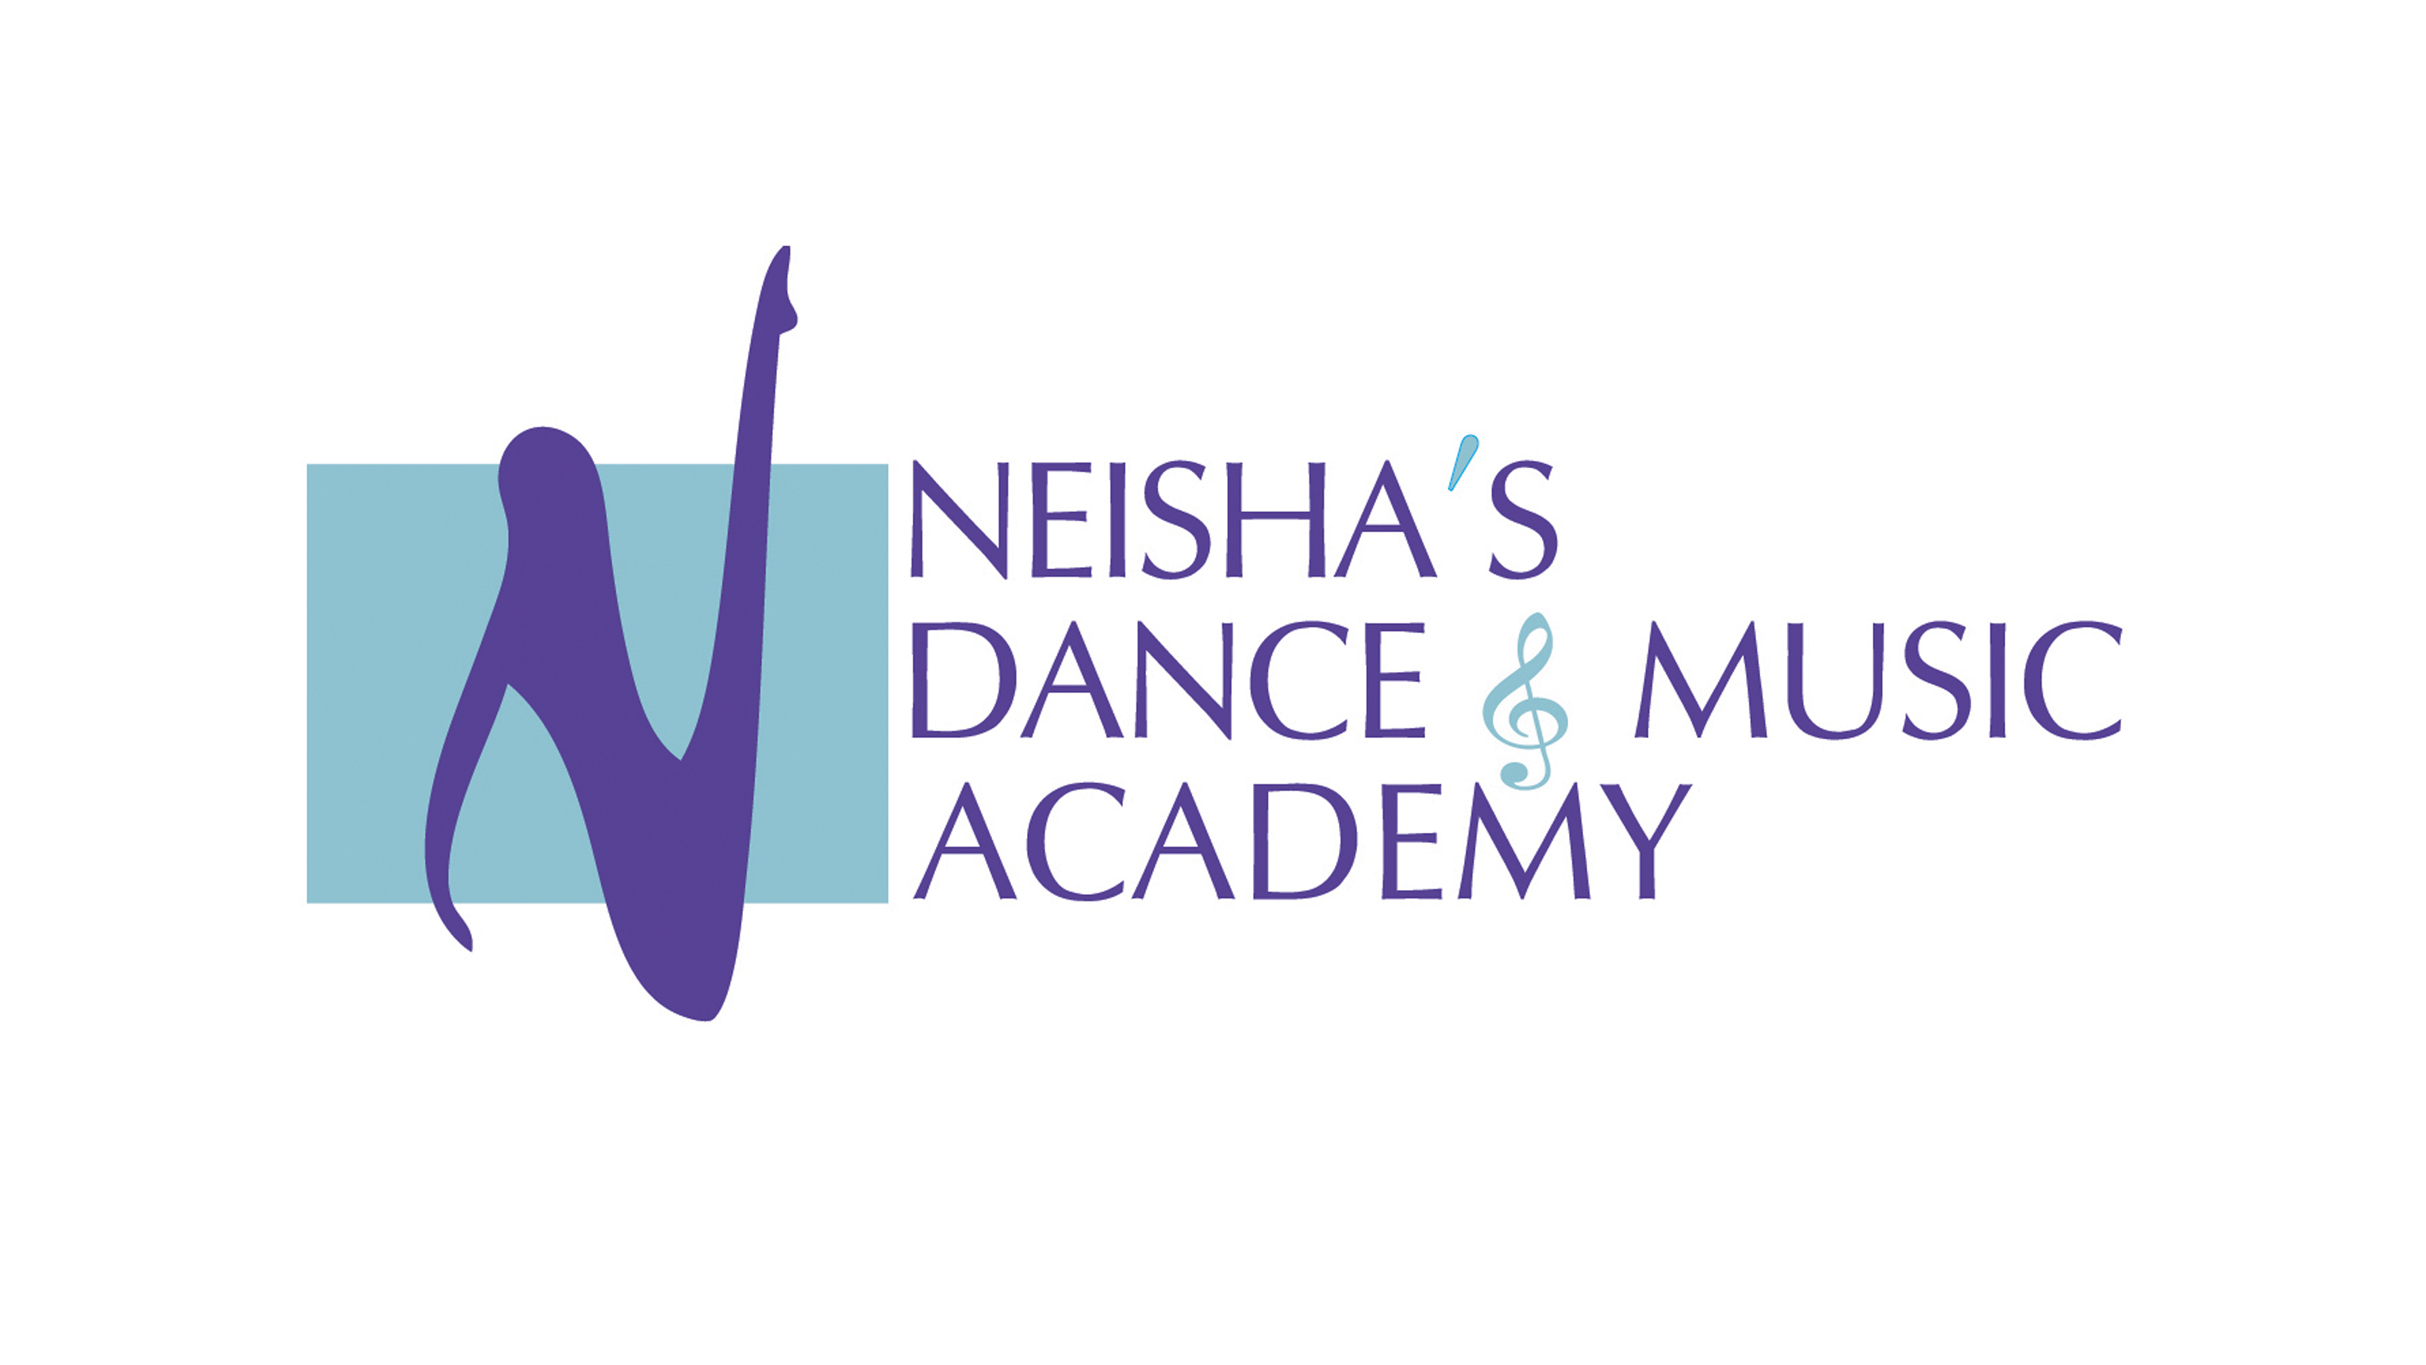 Neisha’s Dance & Music Academy at San Diego Civic Theatre